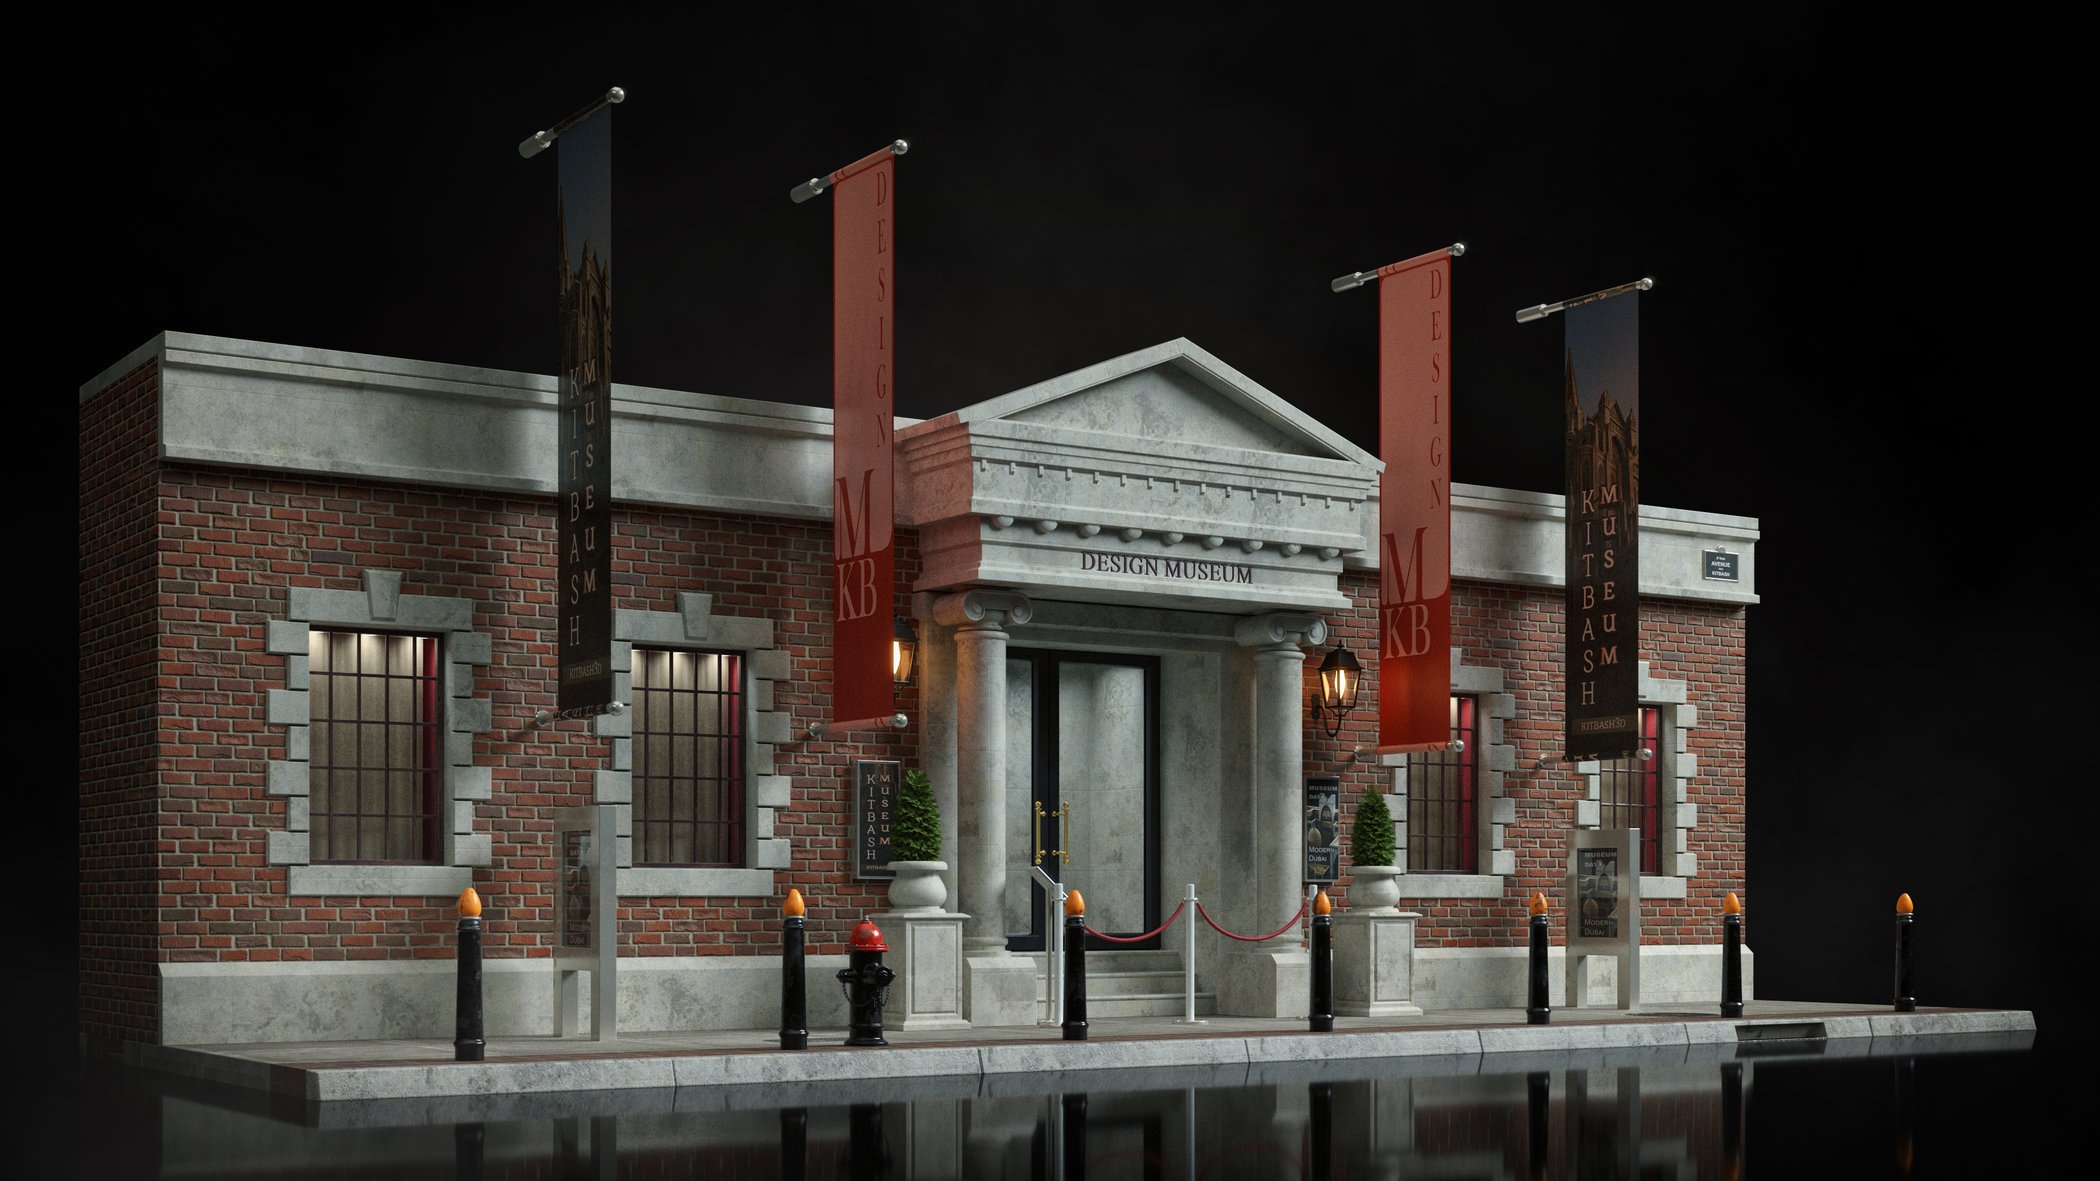 [Kitbash3D] shop building construction street facilities 3D model package  